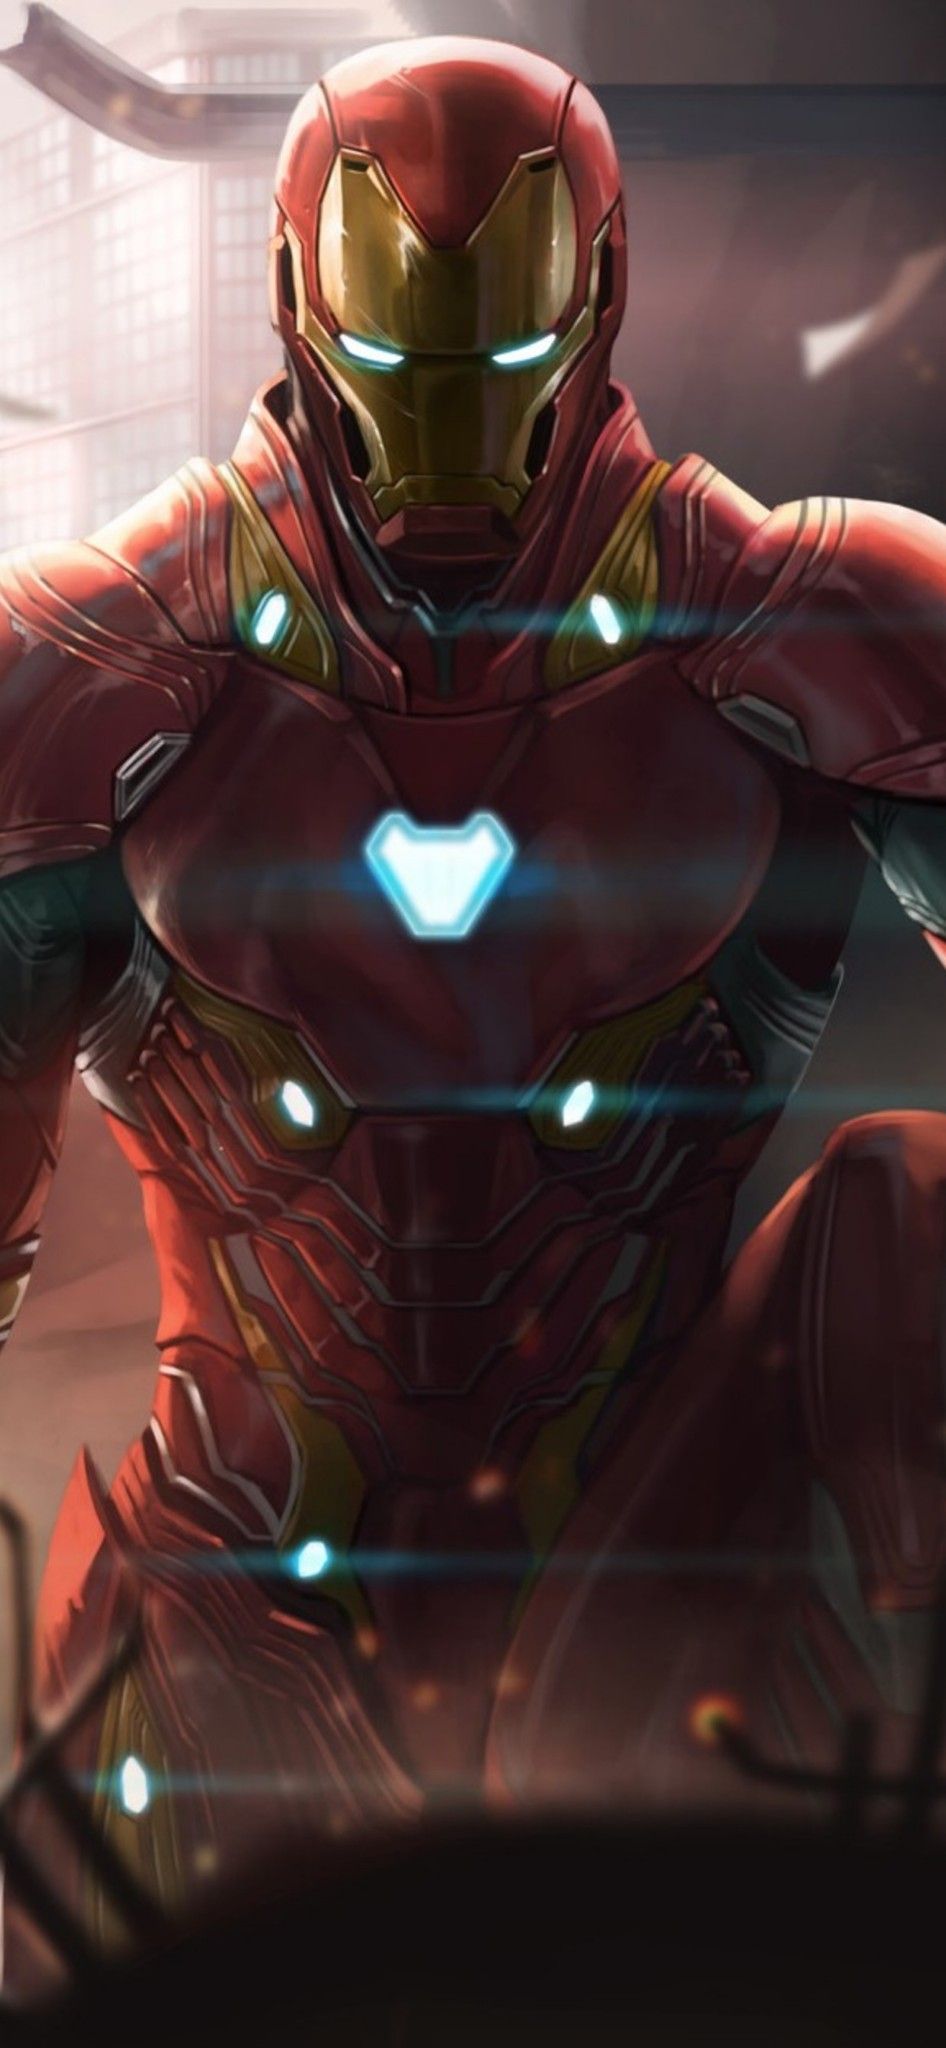 Iron Man Avengers Infinity War Digital Art. Fotos de super herois, Cartaz da marvel, Super heroi